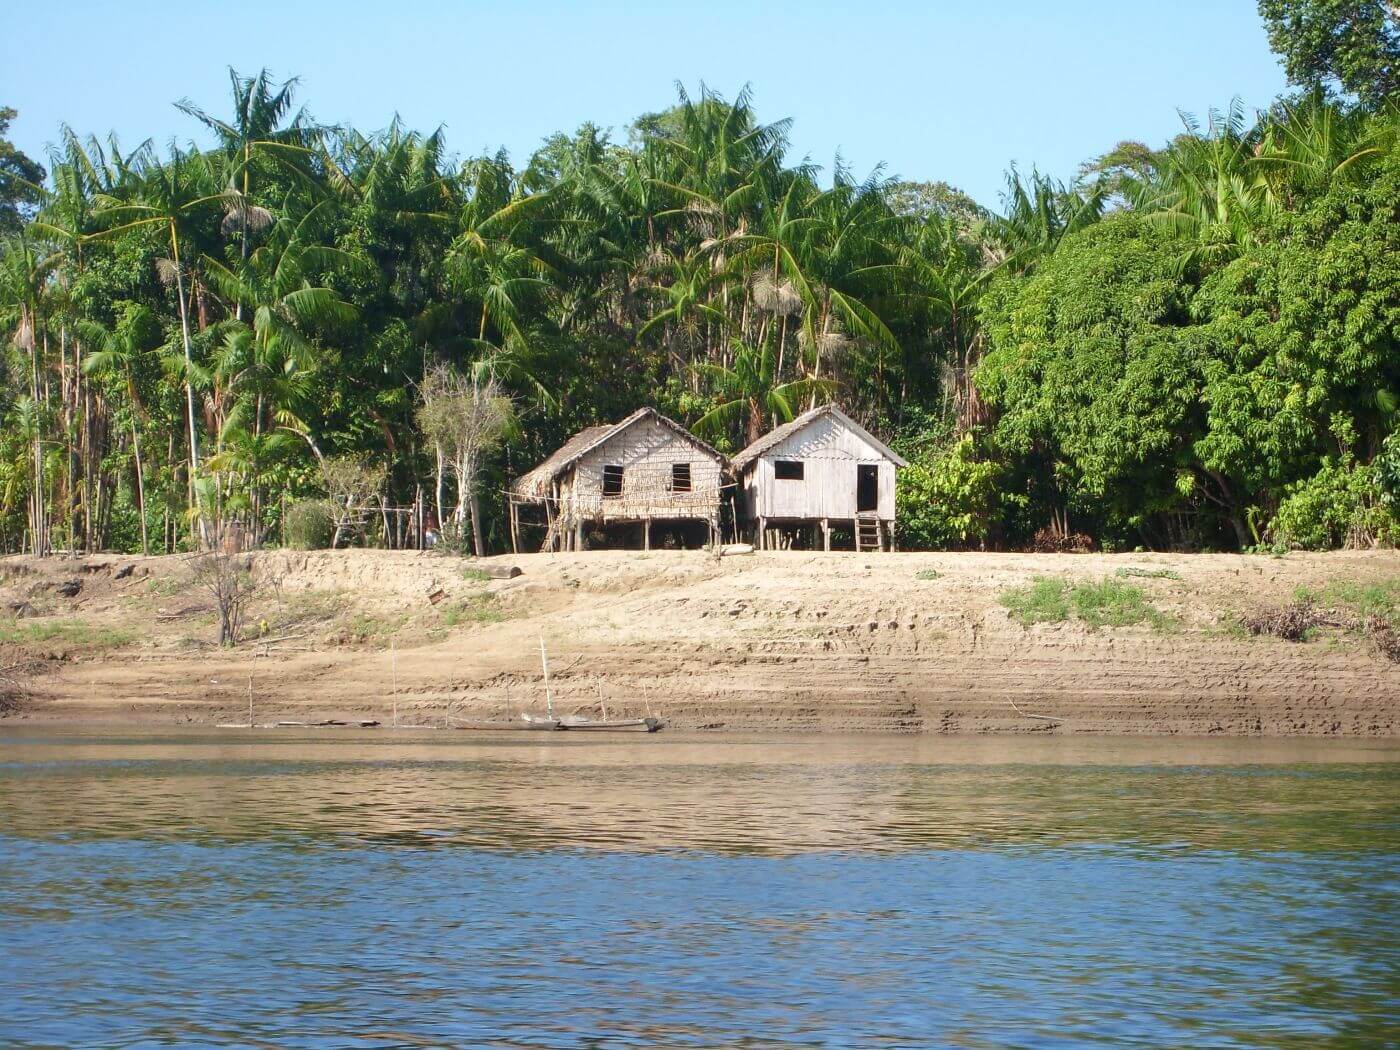 Siedlung am Amazonas